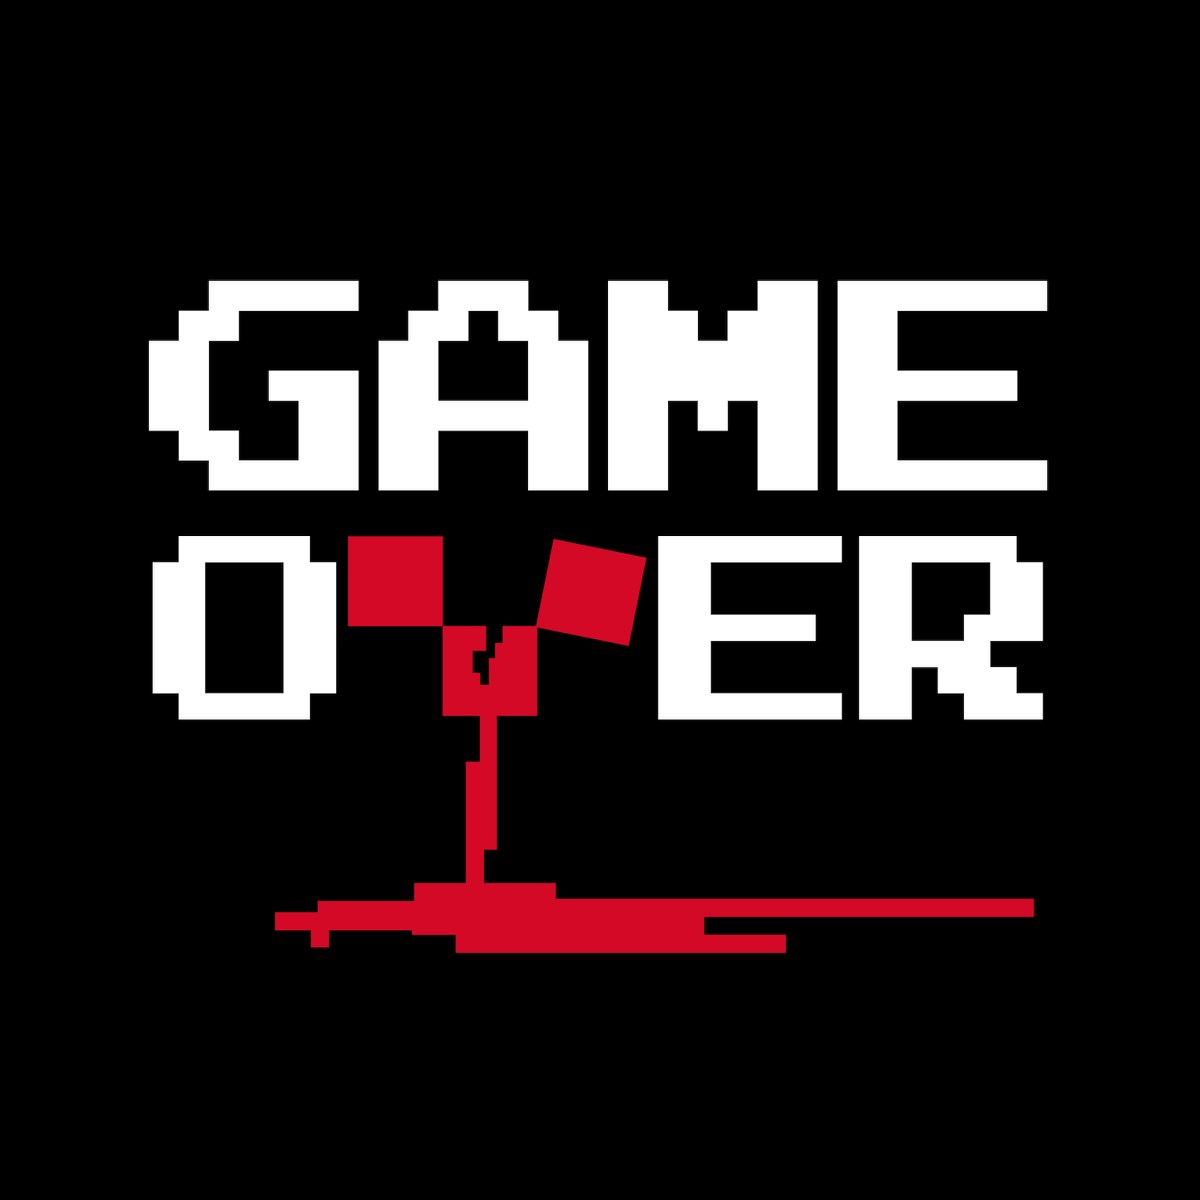 All over a game. Пиксельная гейм овер. Game over пиксели. Game over. Обои гейм овер пиксельные.